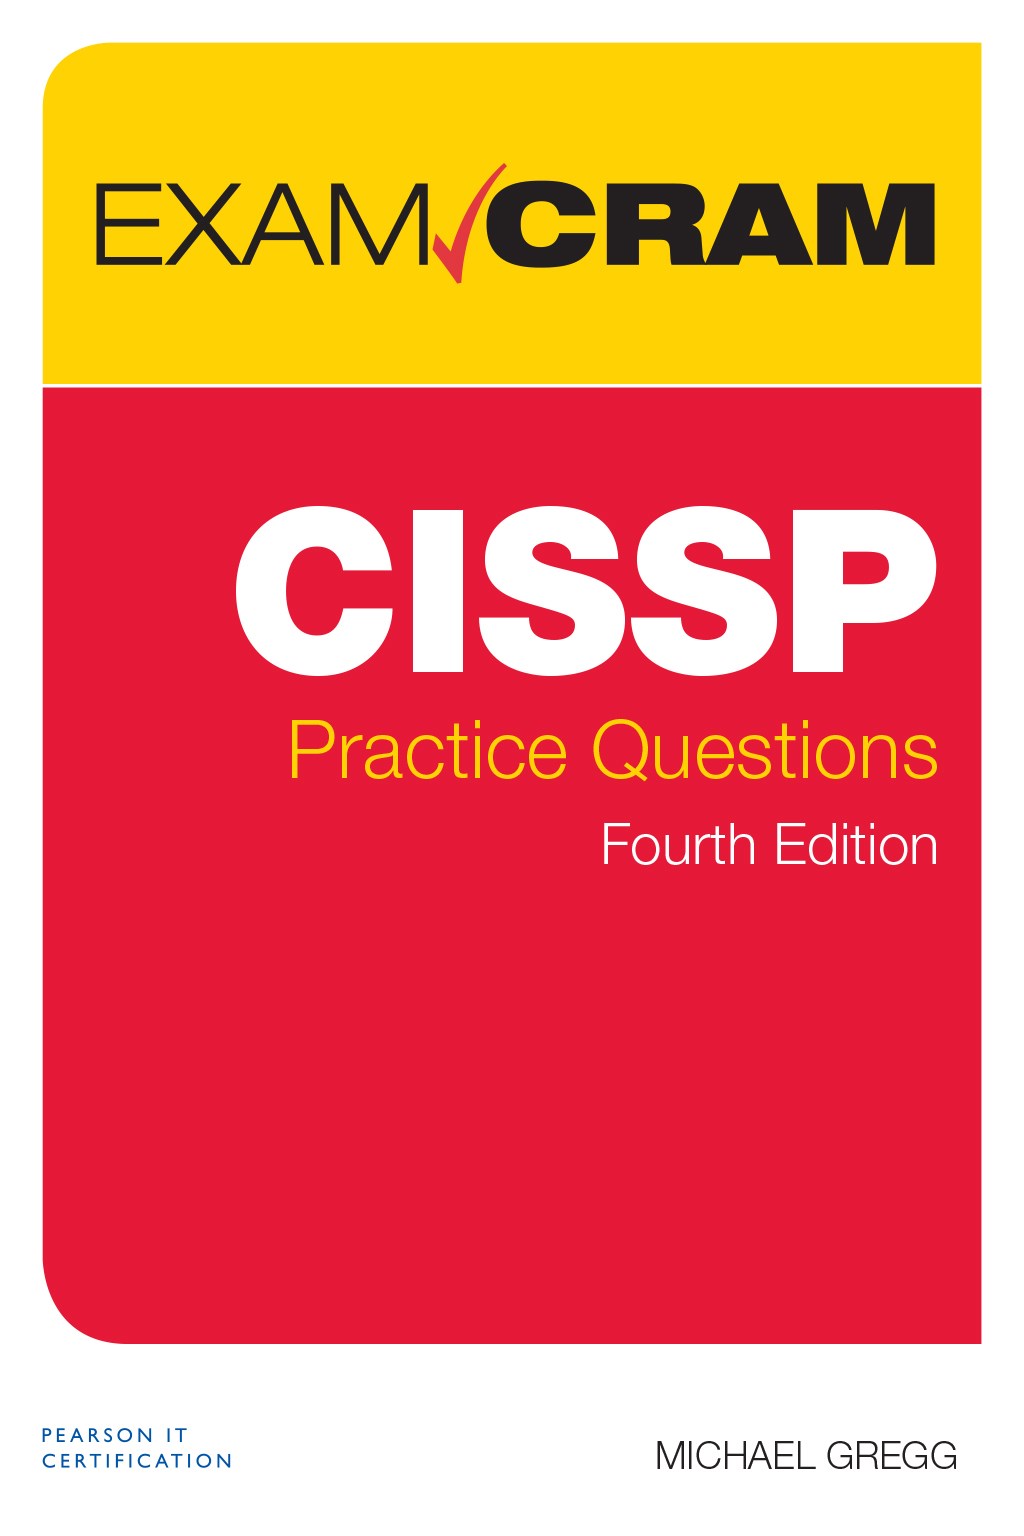 CISSP Practice Questions Exam Cram Premium Edition and Practice Tests, 4th Edition